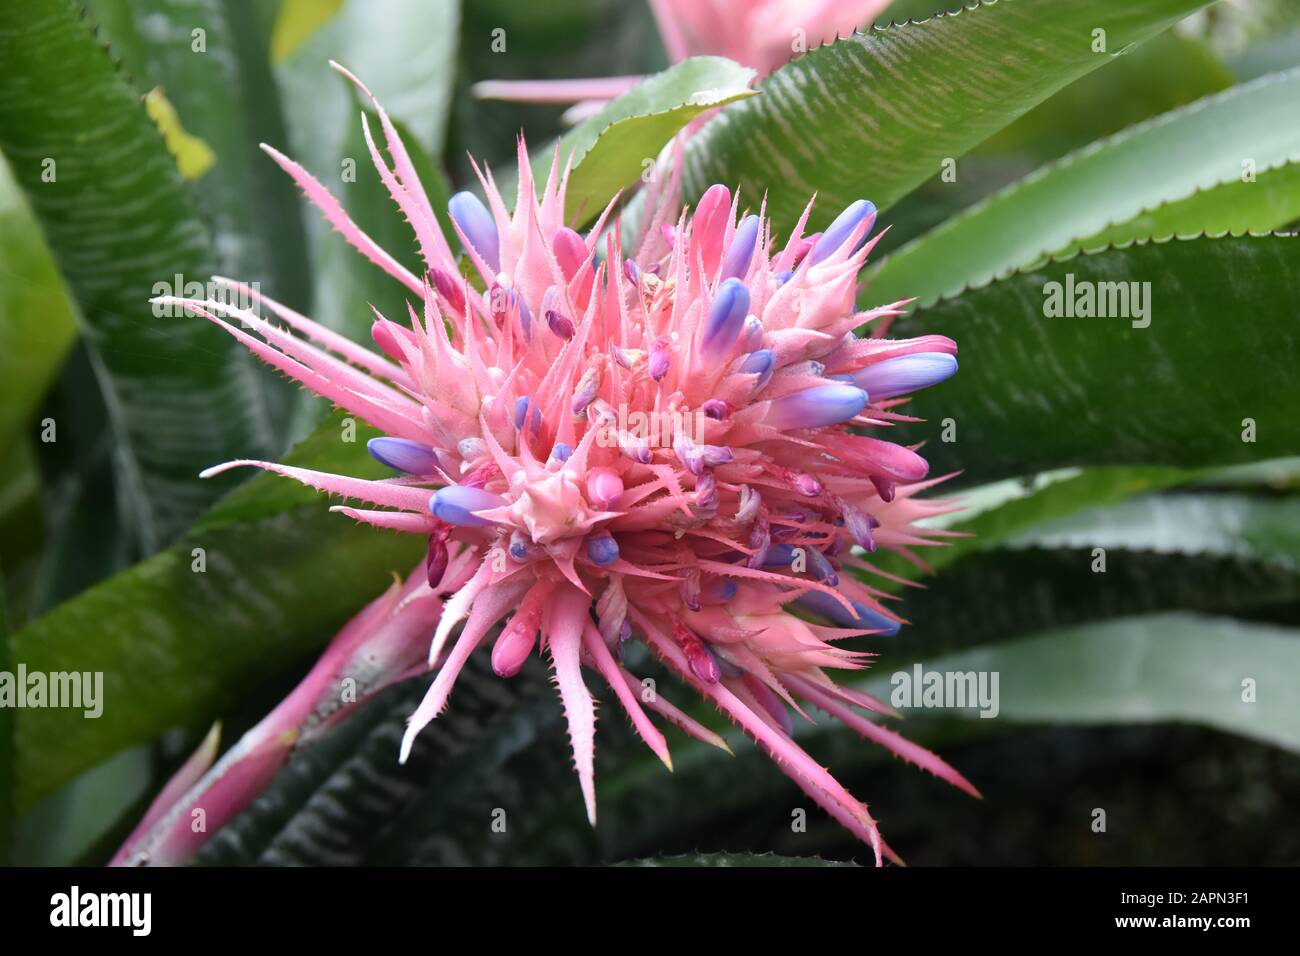 Big Pink Flower On Silver Vase Urn Plant Aechmea Fasciata Stock Photo Alamy